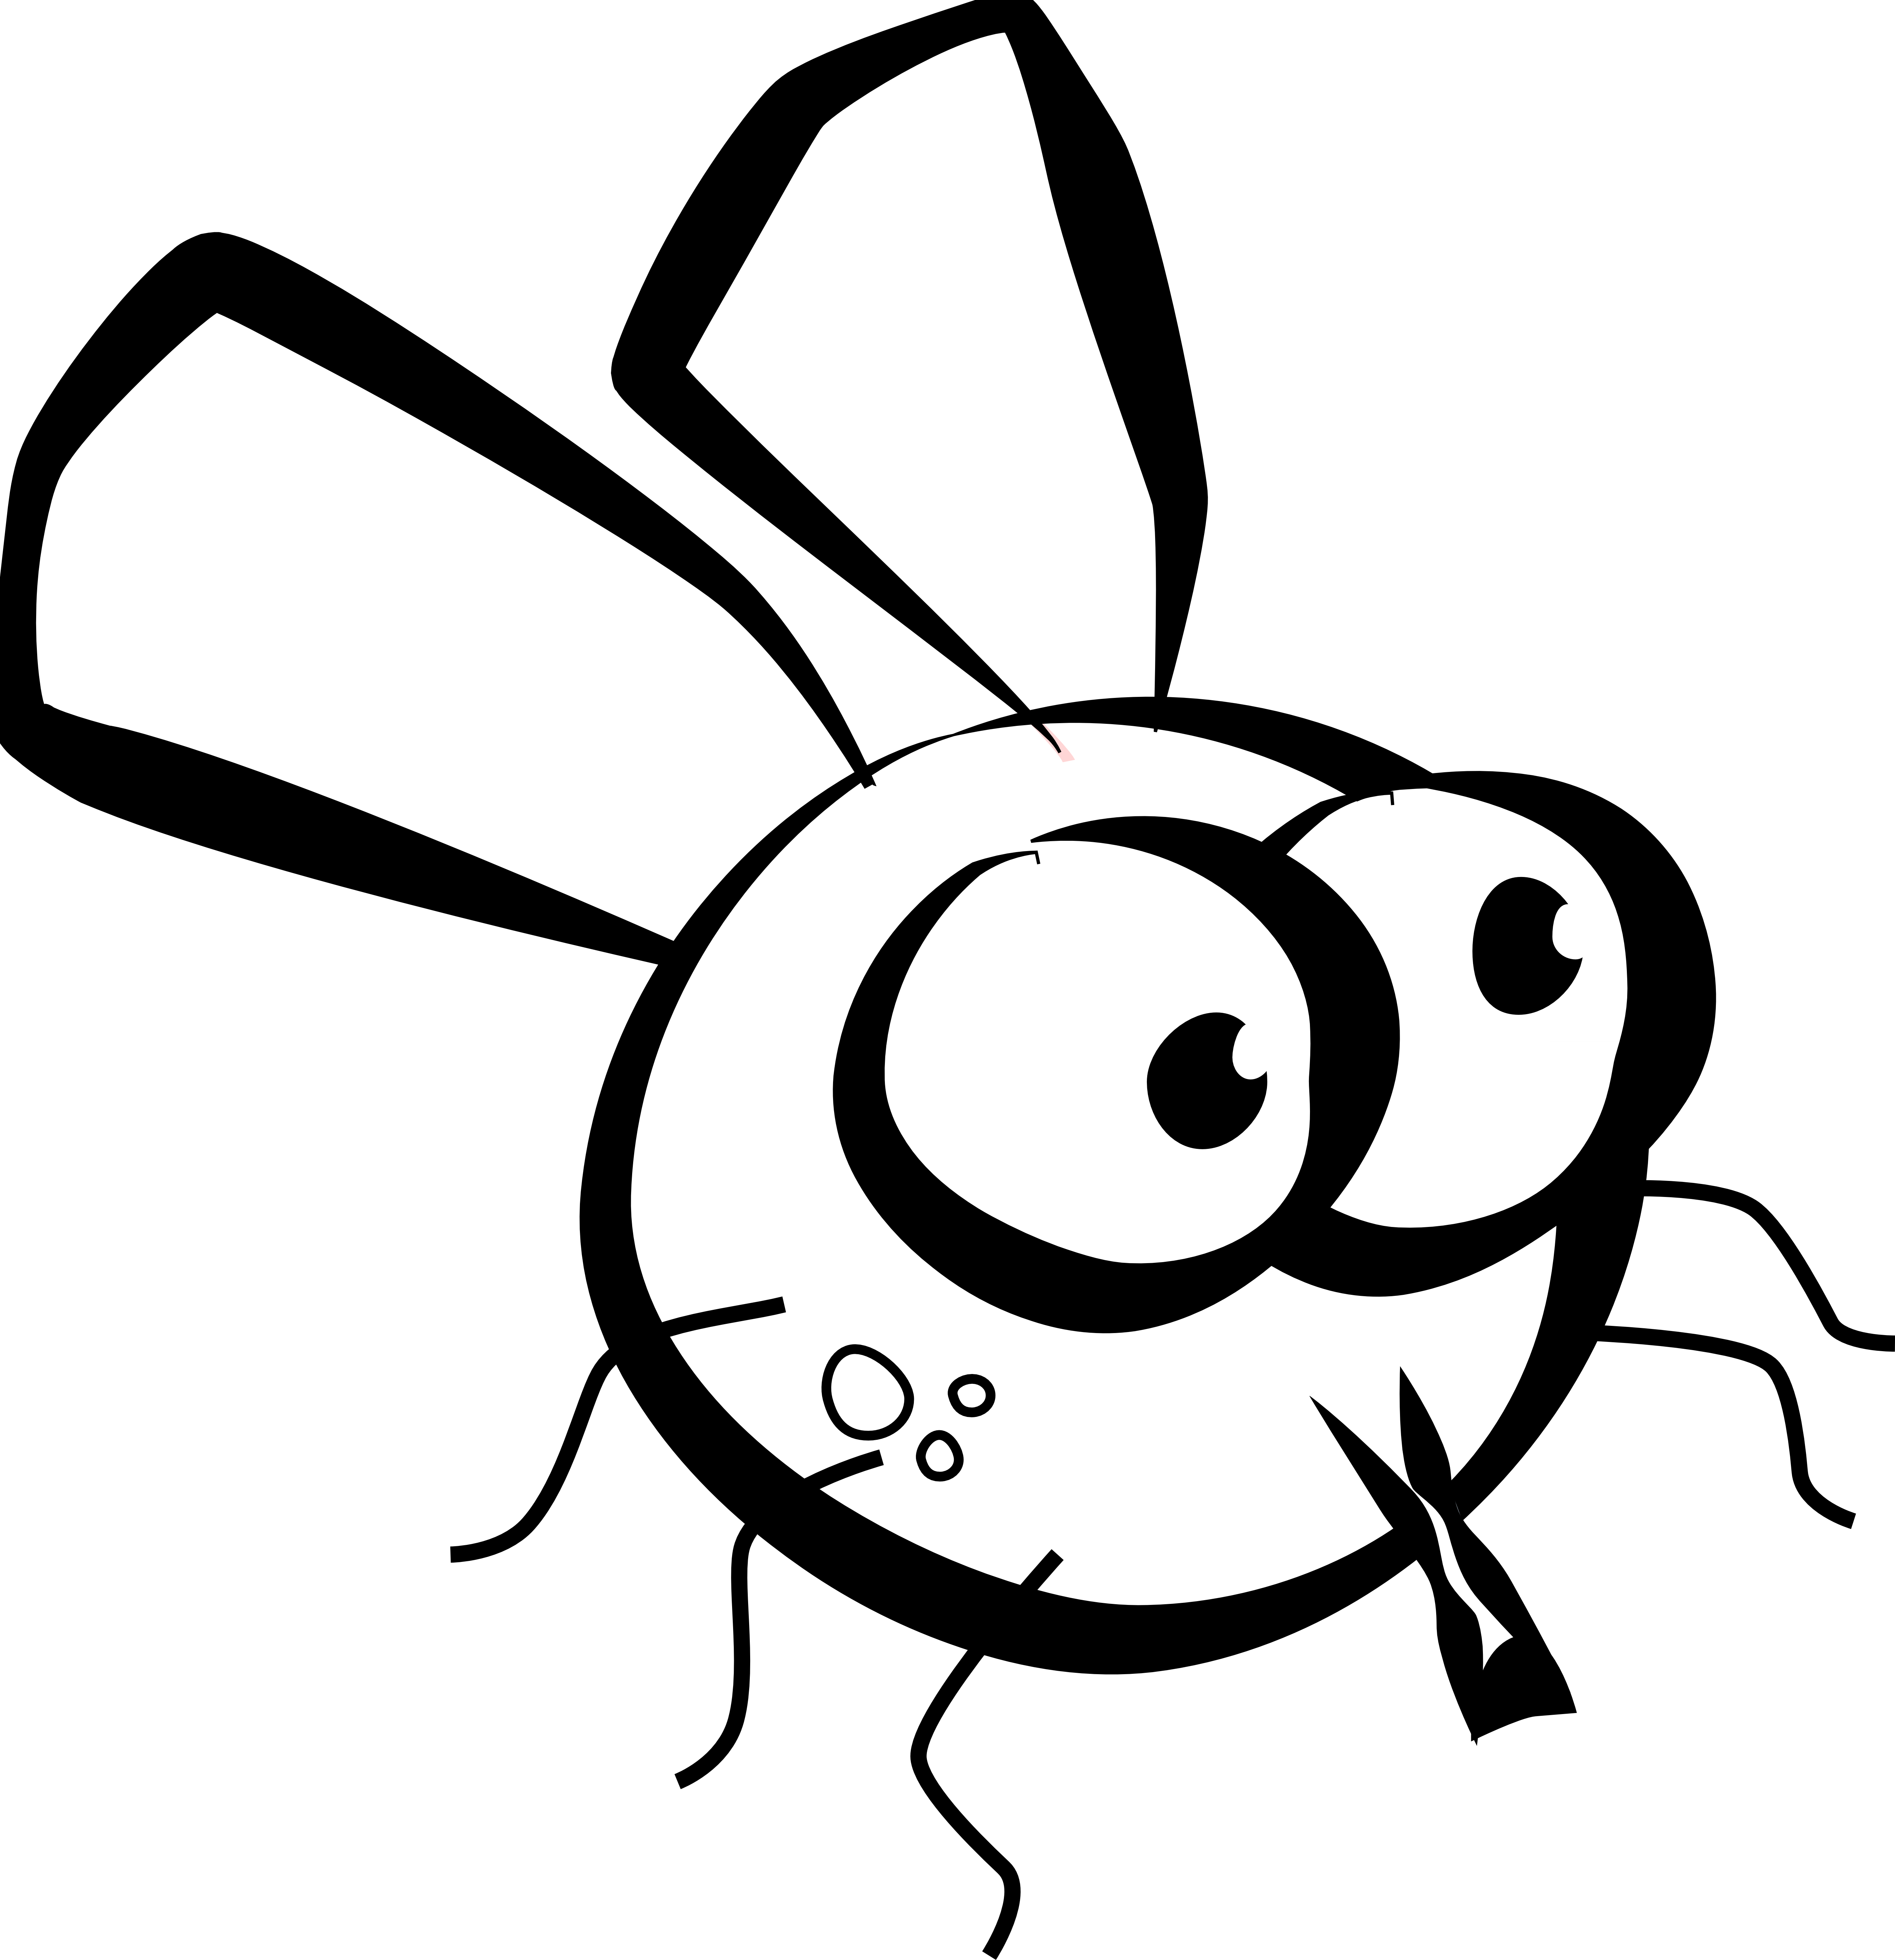 Cartoon Fly - Clipart library